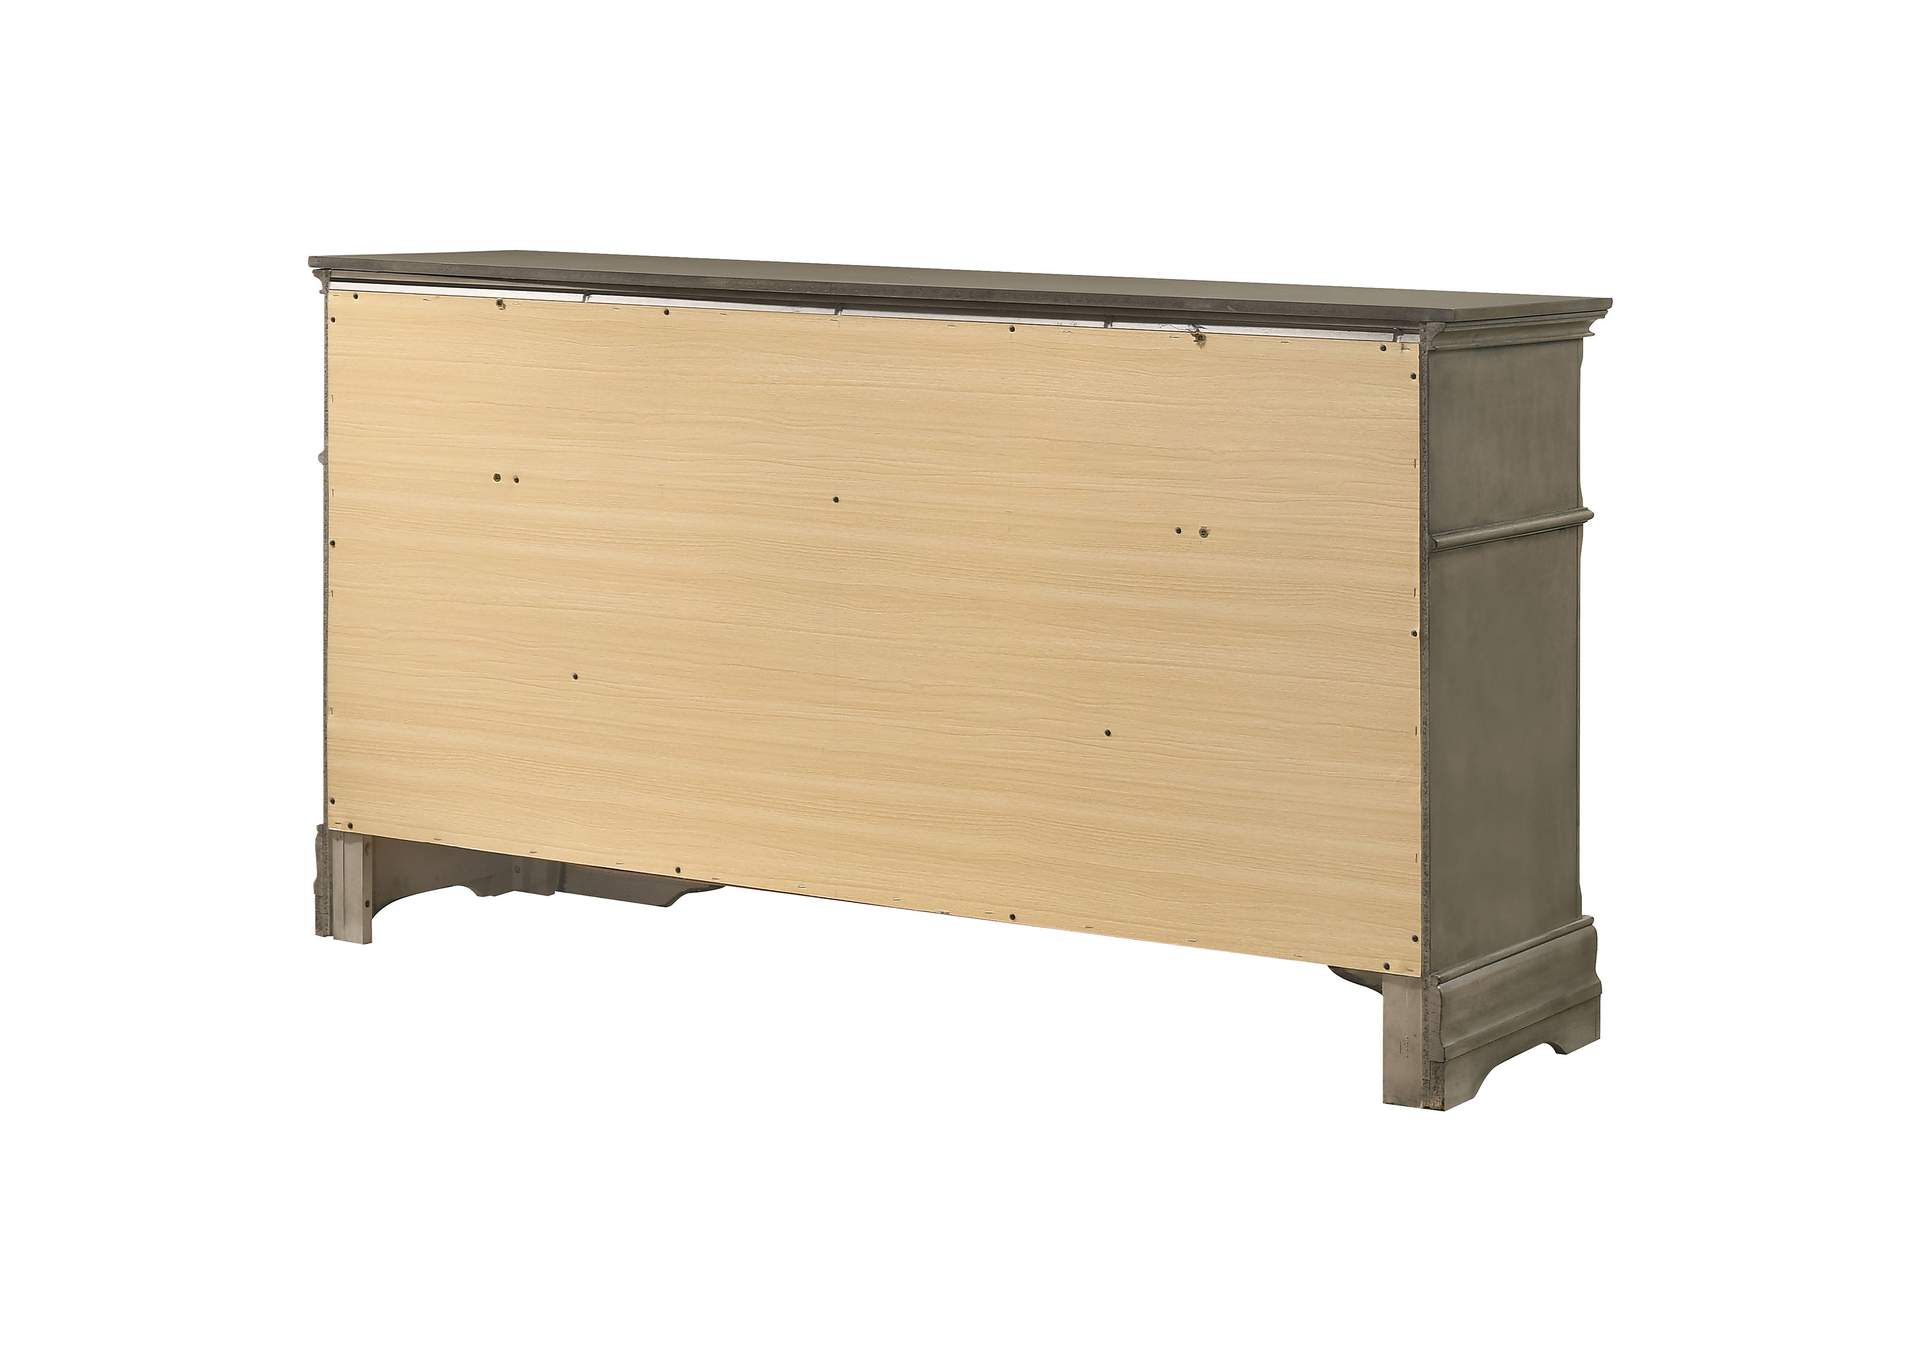 Manchester 7-drawer Dresser Wheat,Coaster Furniture